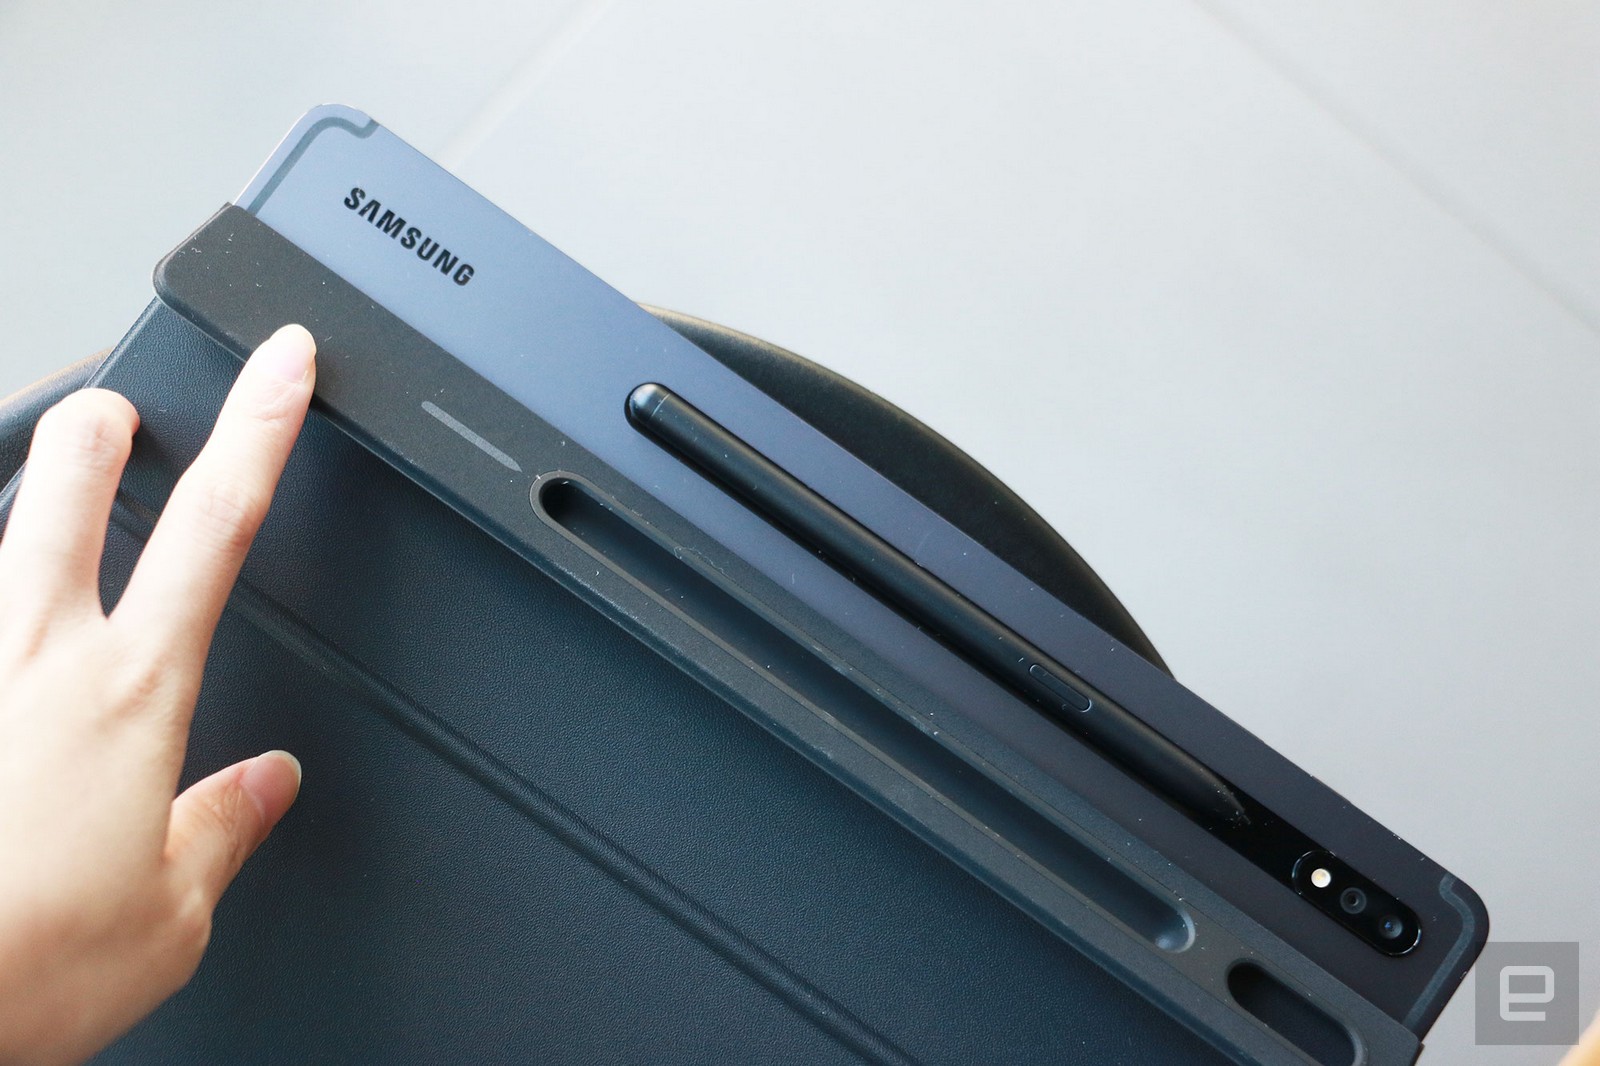 Samsung Galaxy Tab S7+ hands-on